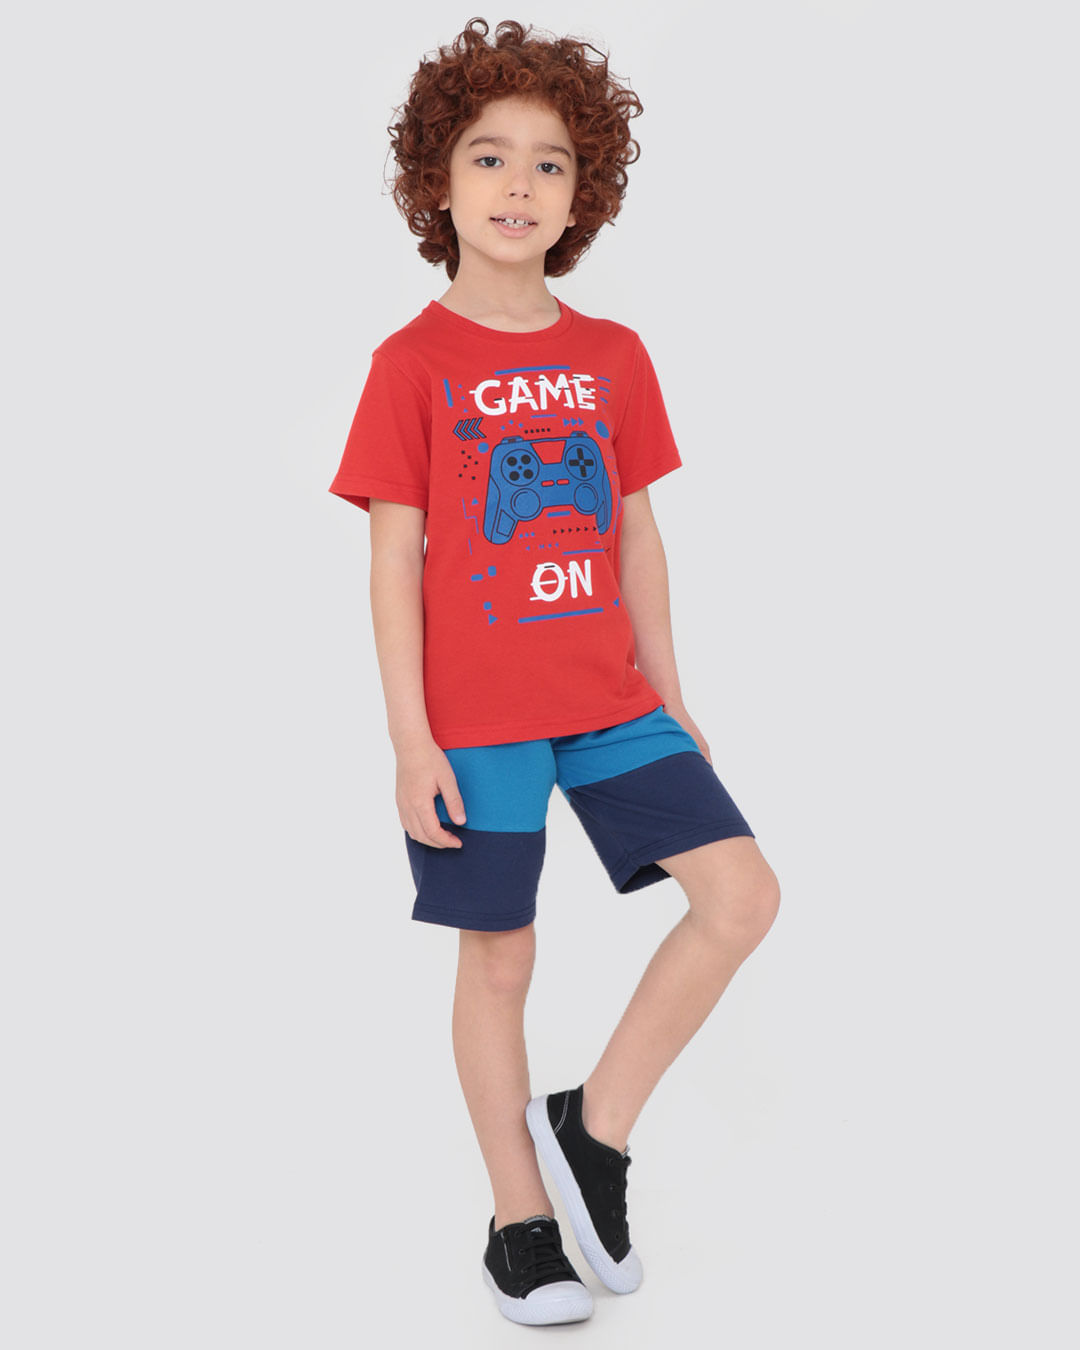 Camiseta-Infantil-Estampa-Game-Vermelha-